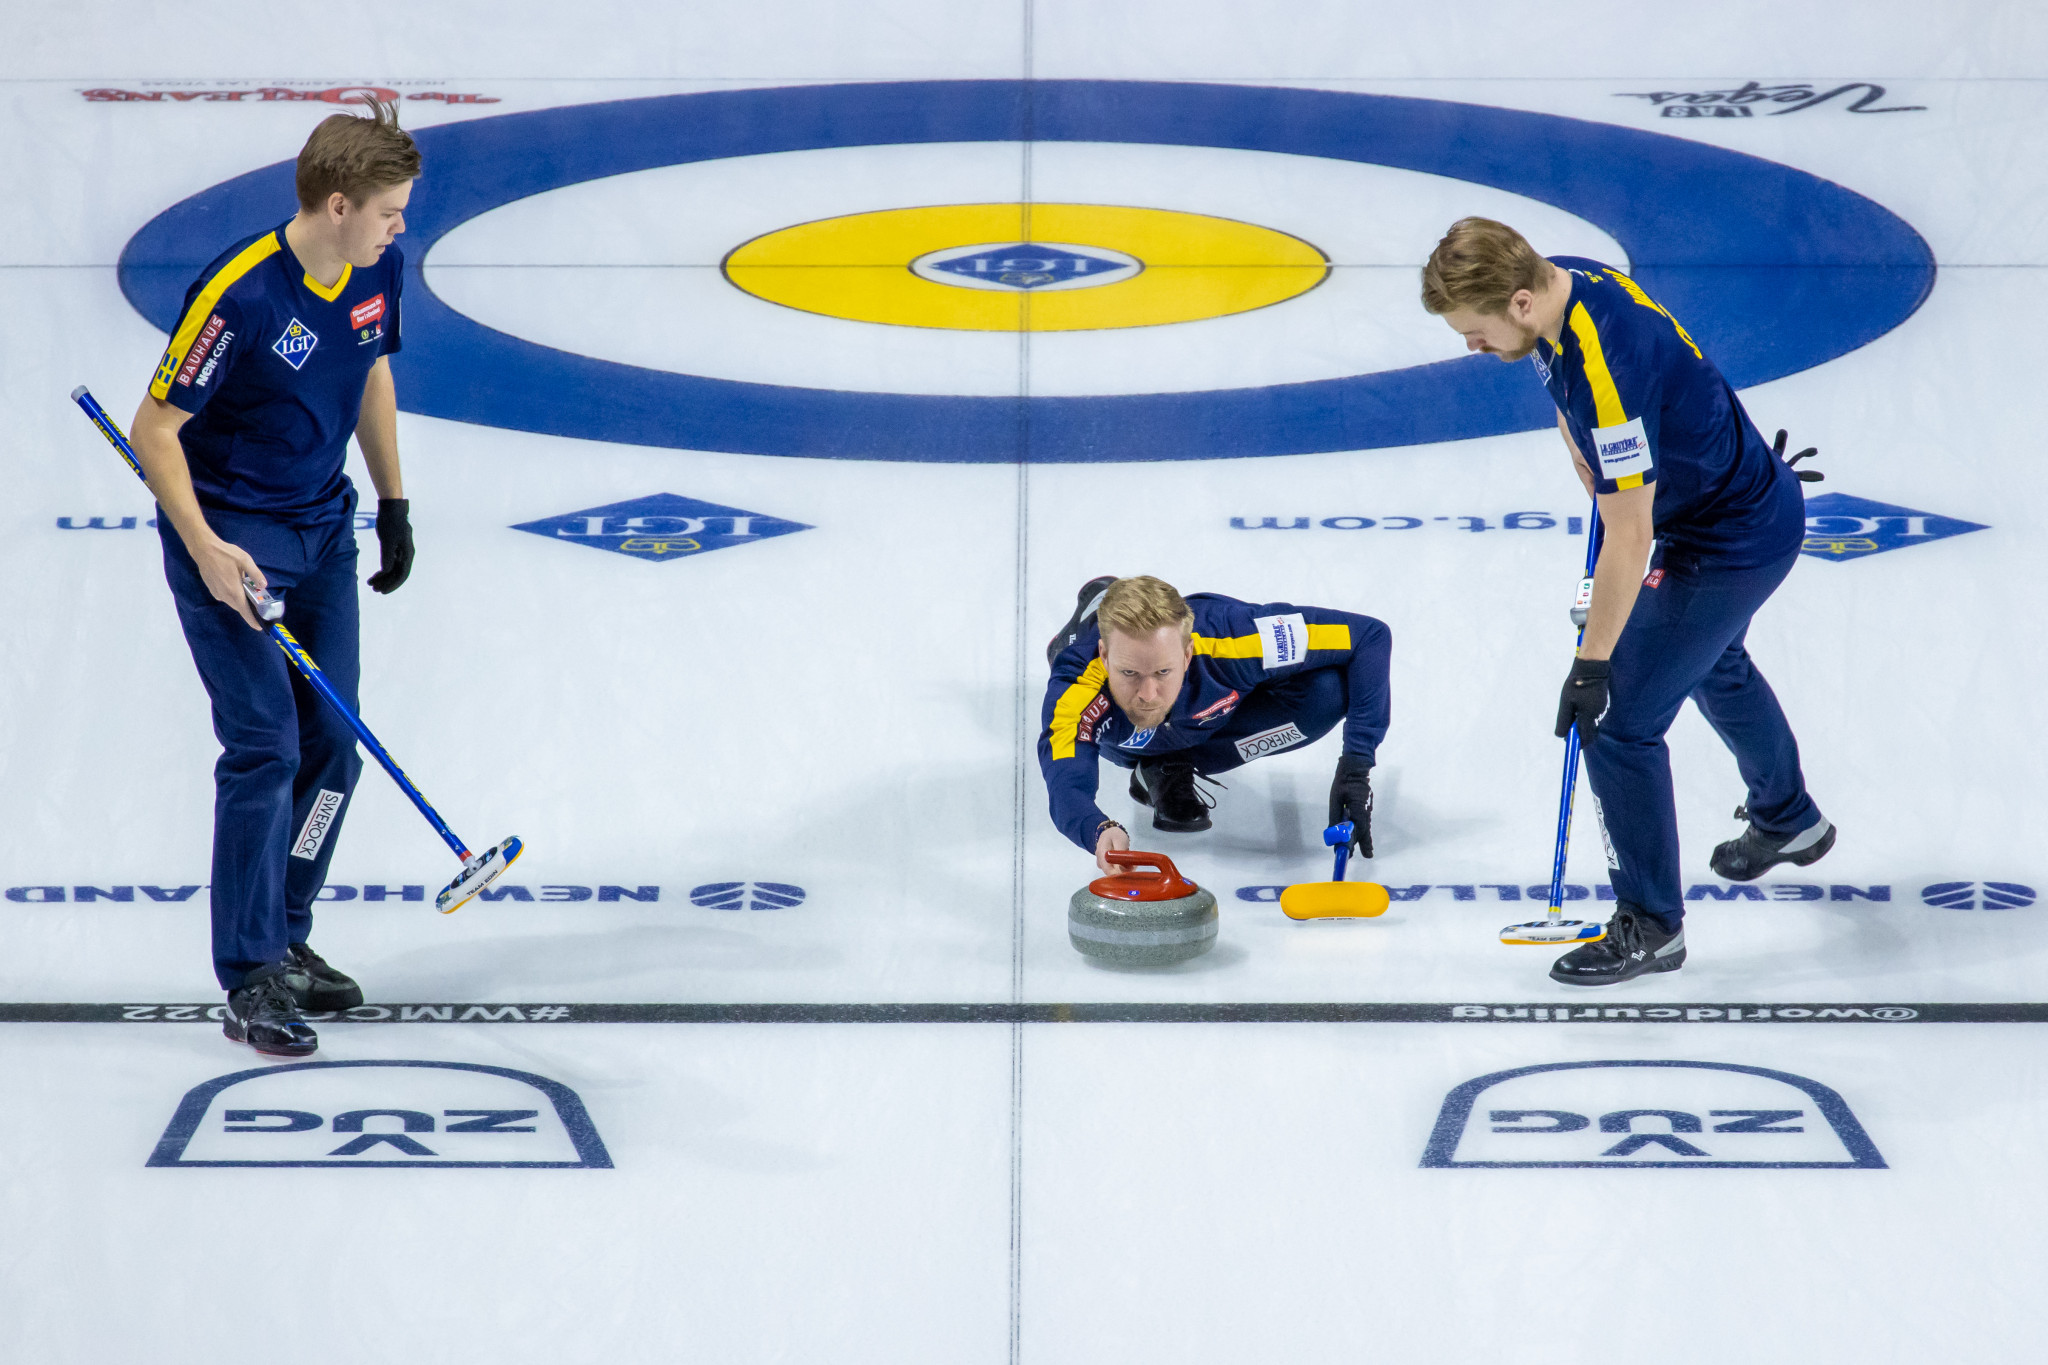 Defending champions Sweden slip to shock defeats at World Men's Curling Championship